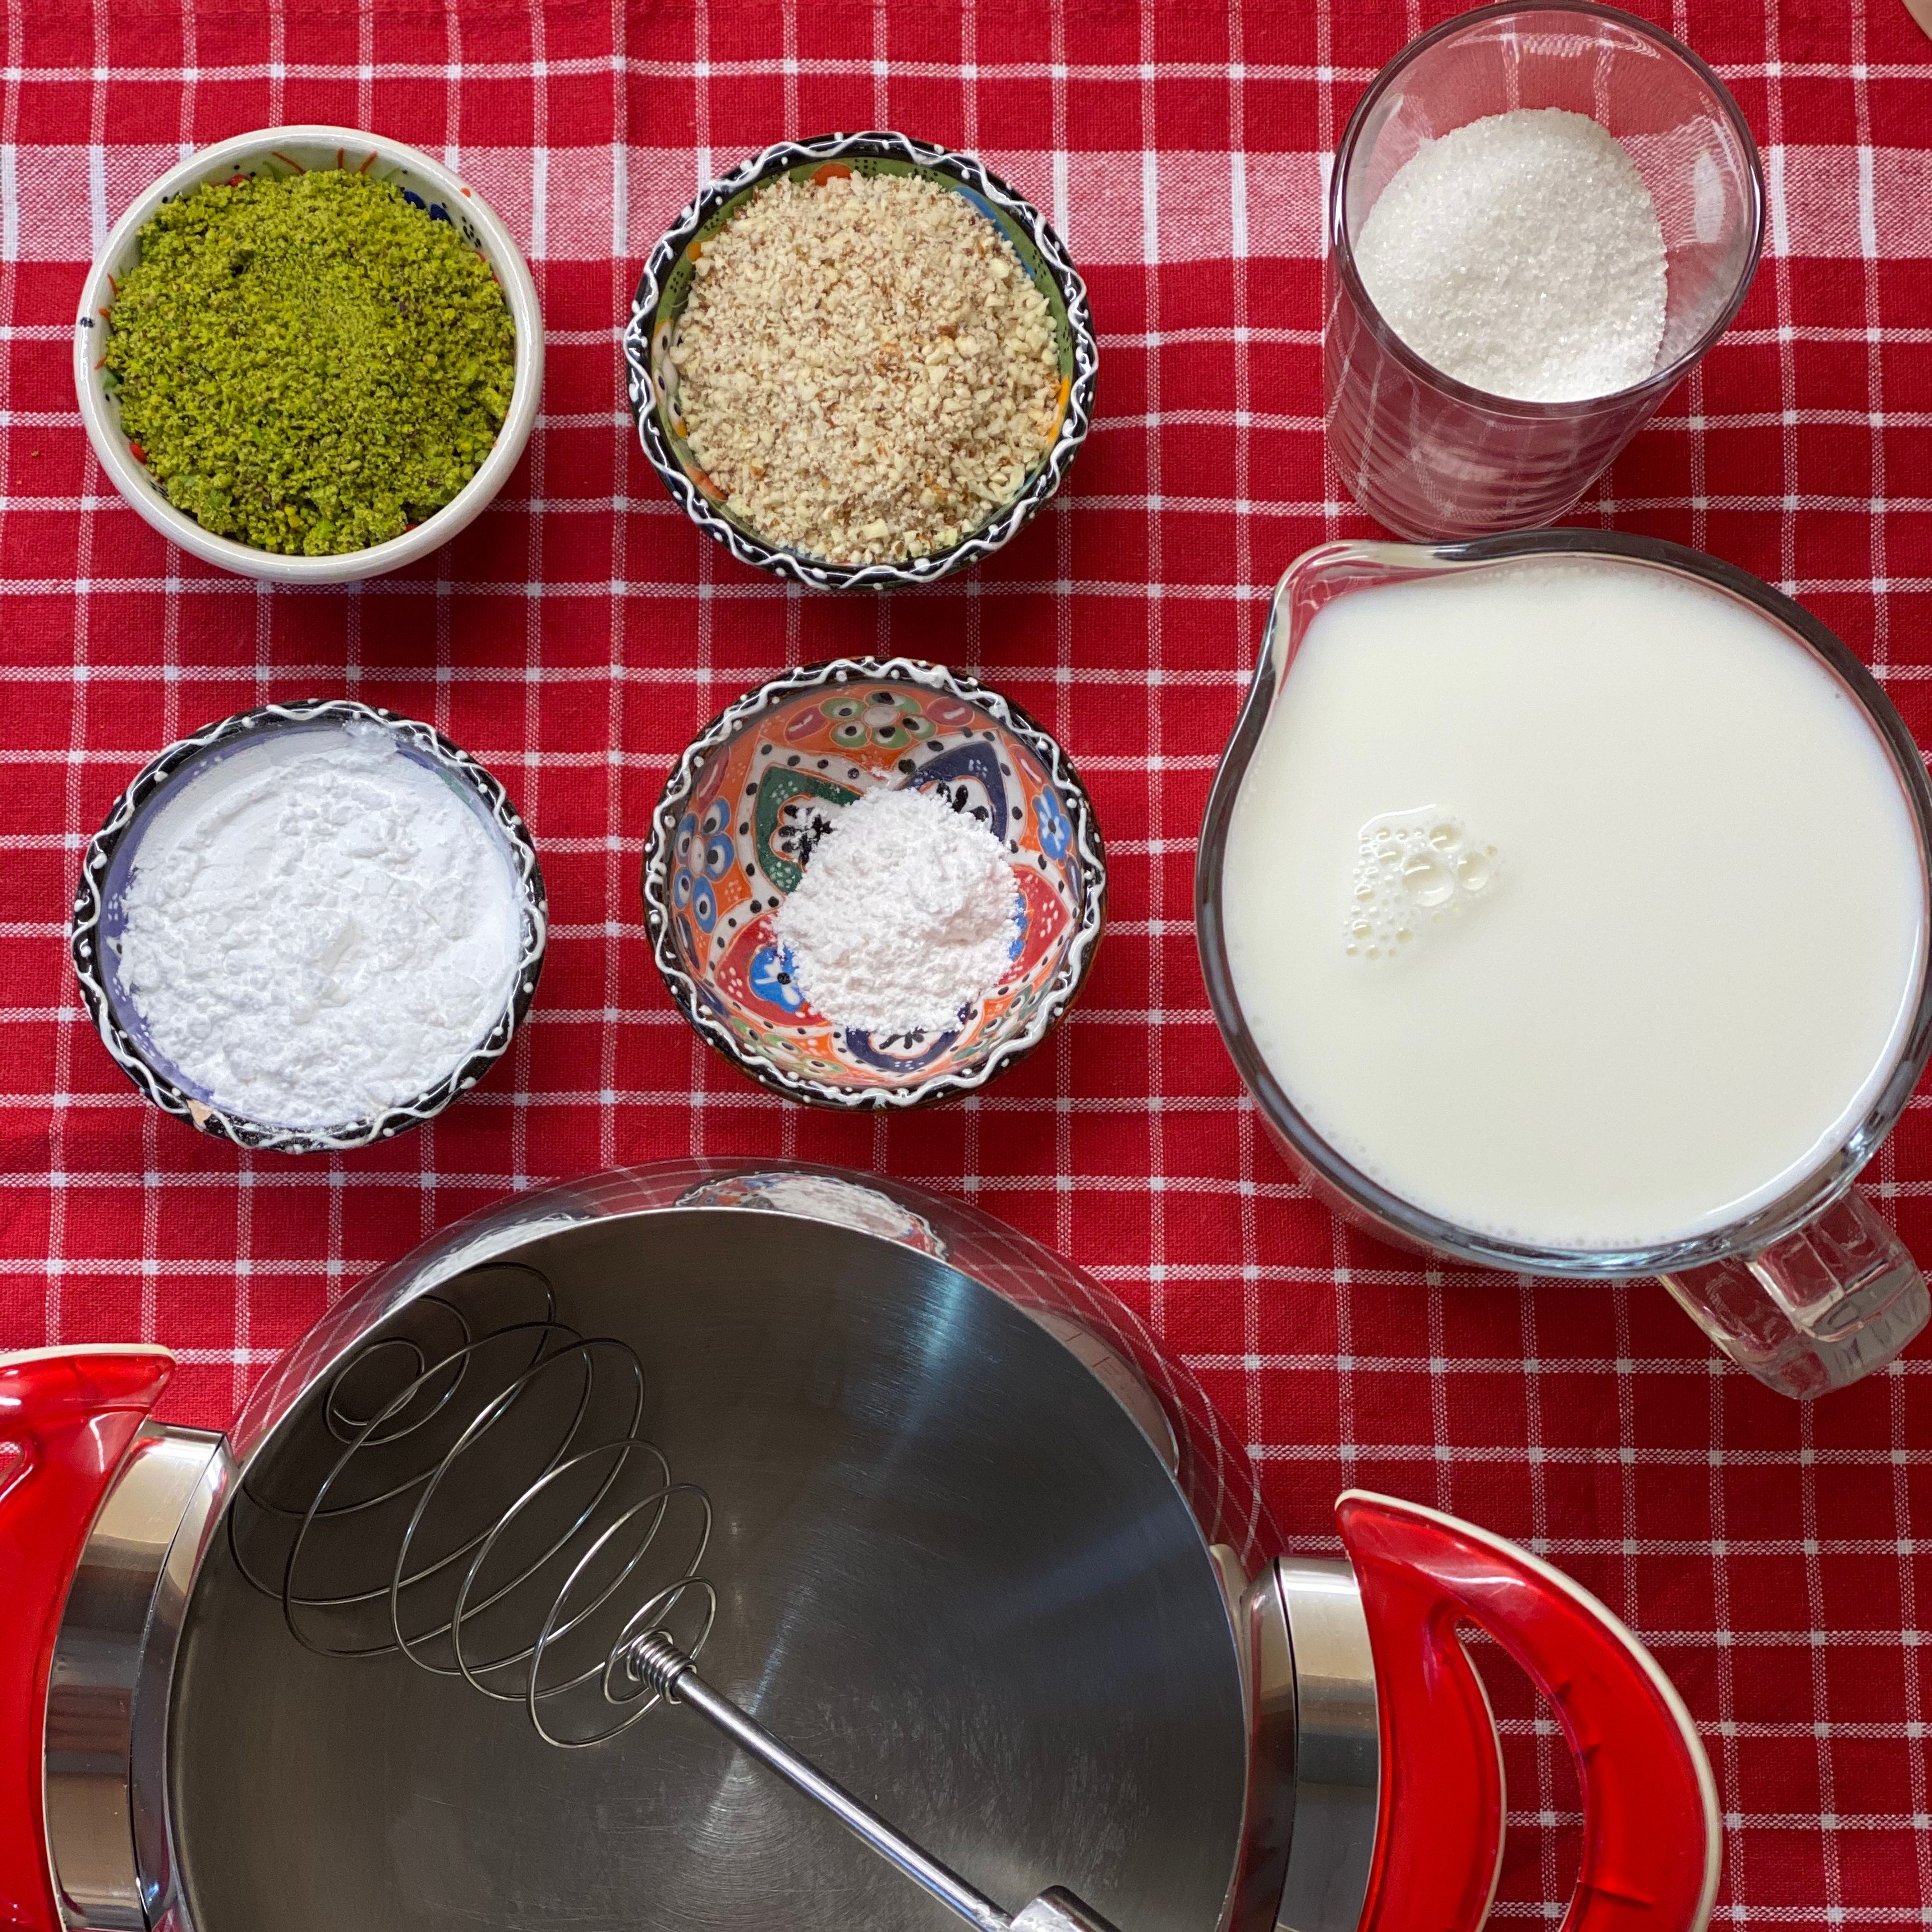 Add the milk, starch of wheat, sugar, vanilla, and chopped almonds to a saucepan.